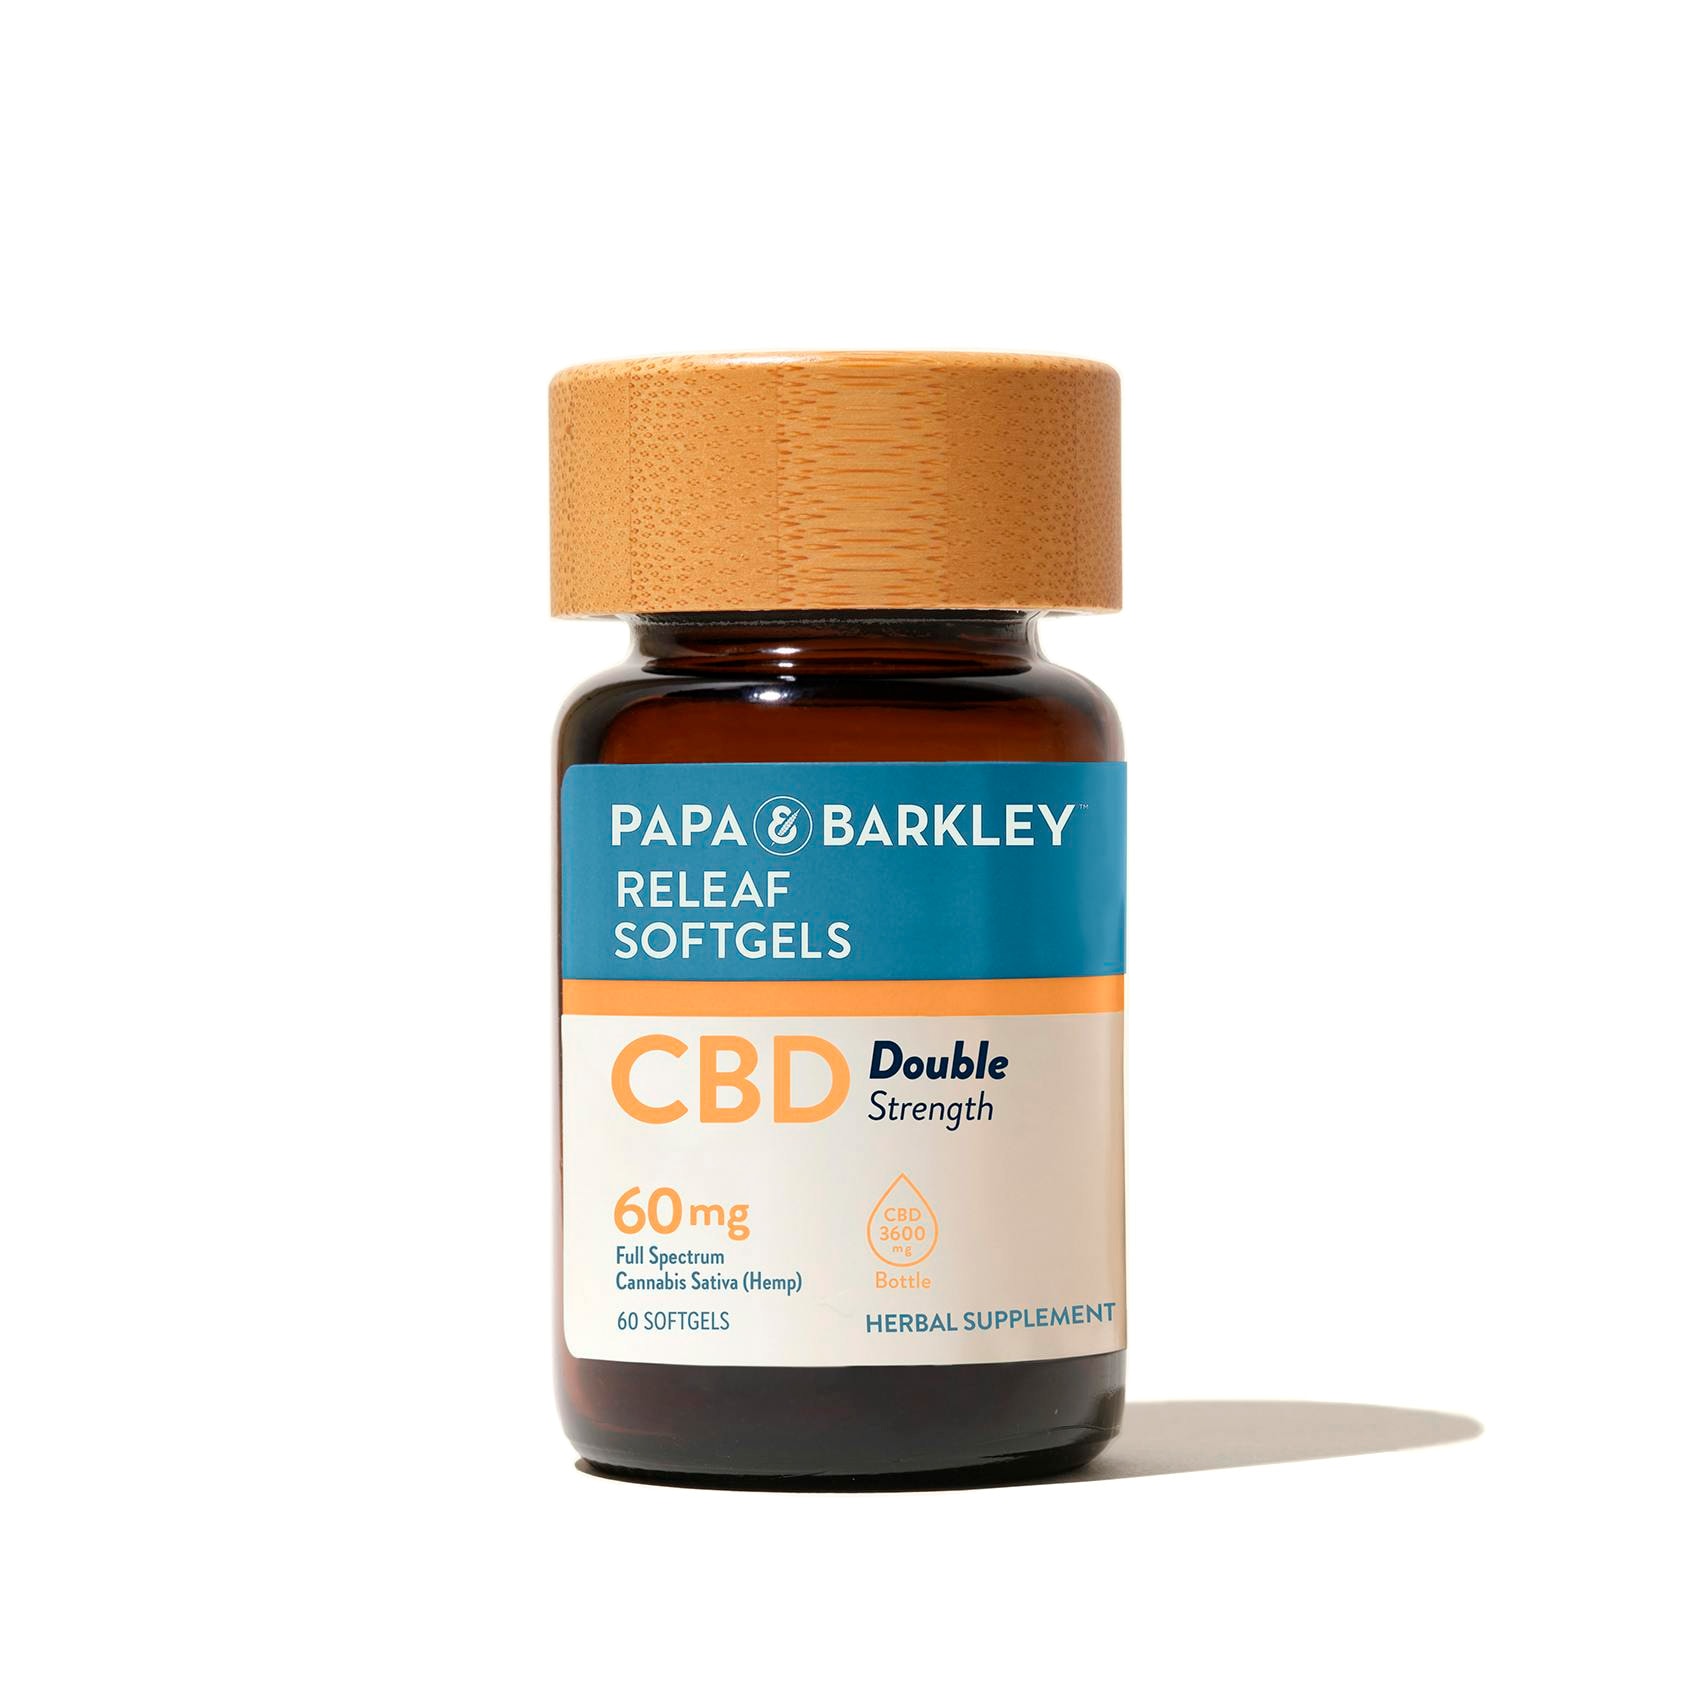 Papa & Barkley, CBD Releaf Softgels Double Strength 60mg, Full Spectrum, 60ct, 3600mg CBD